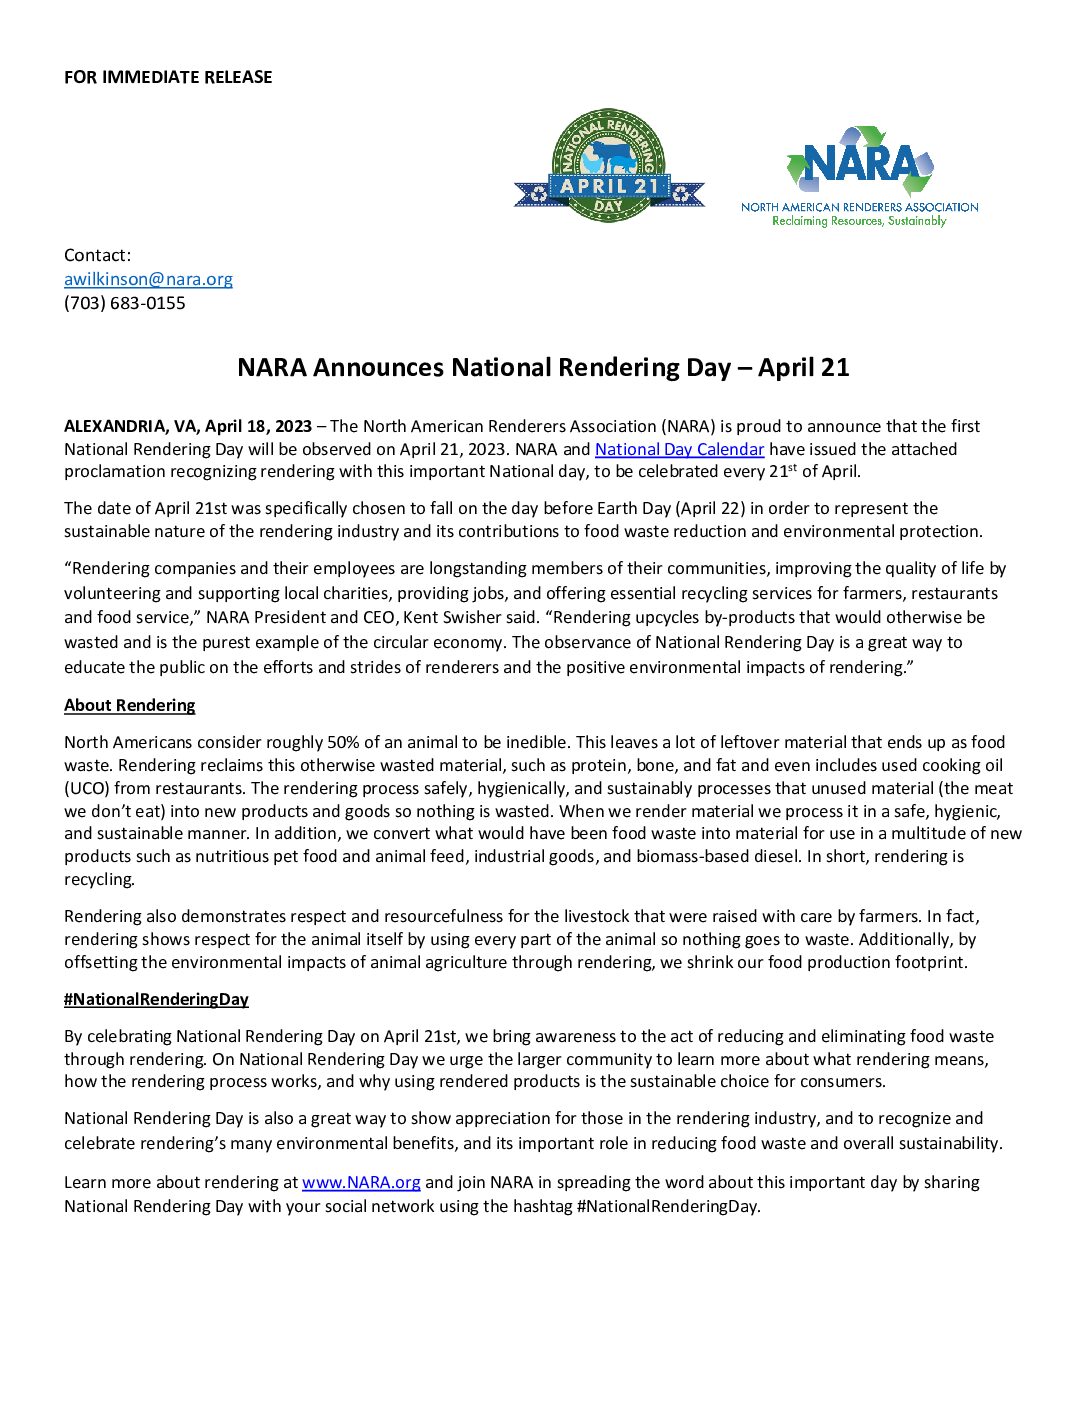 NARA Announces National Rendering Day - April 21